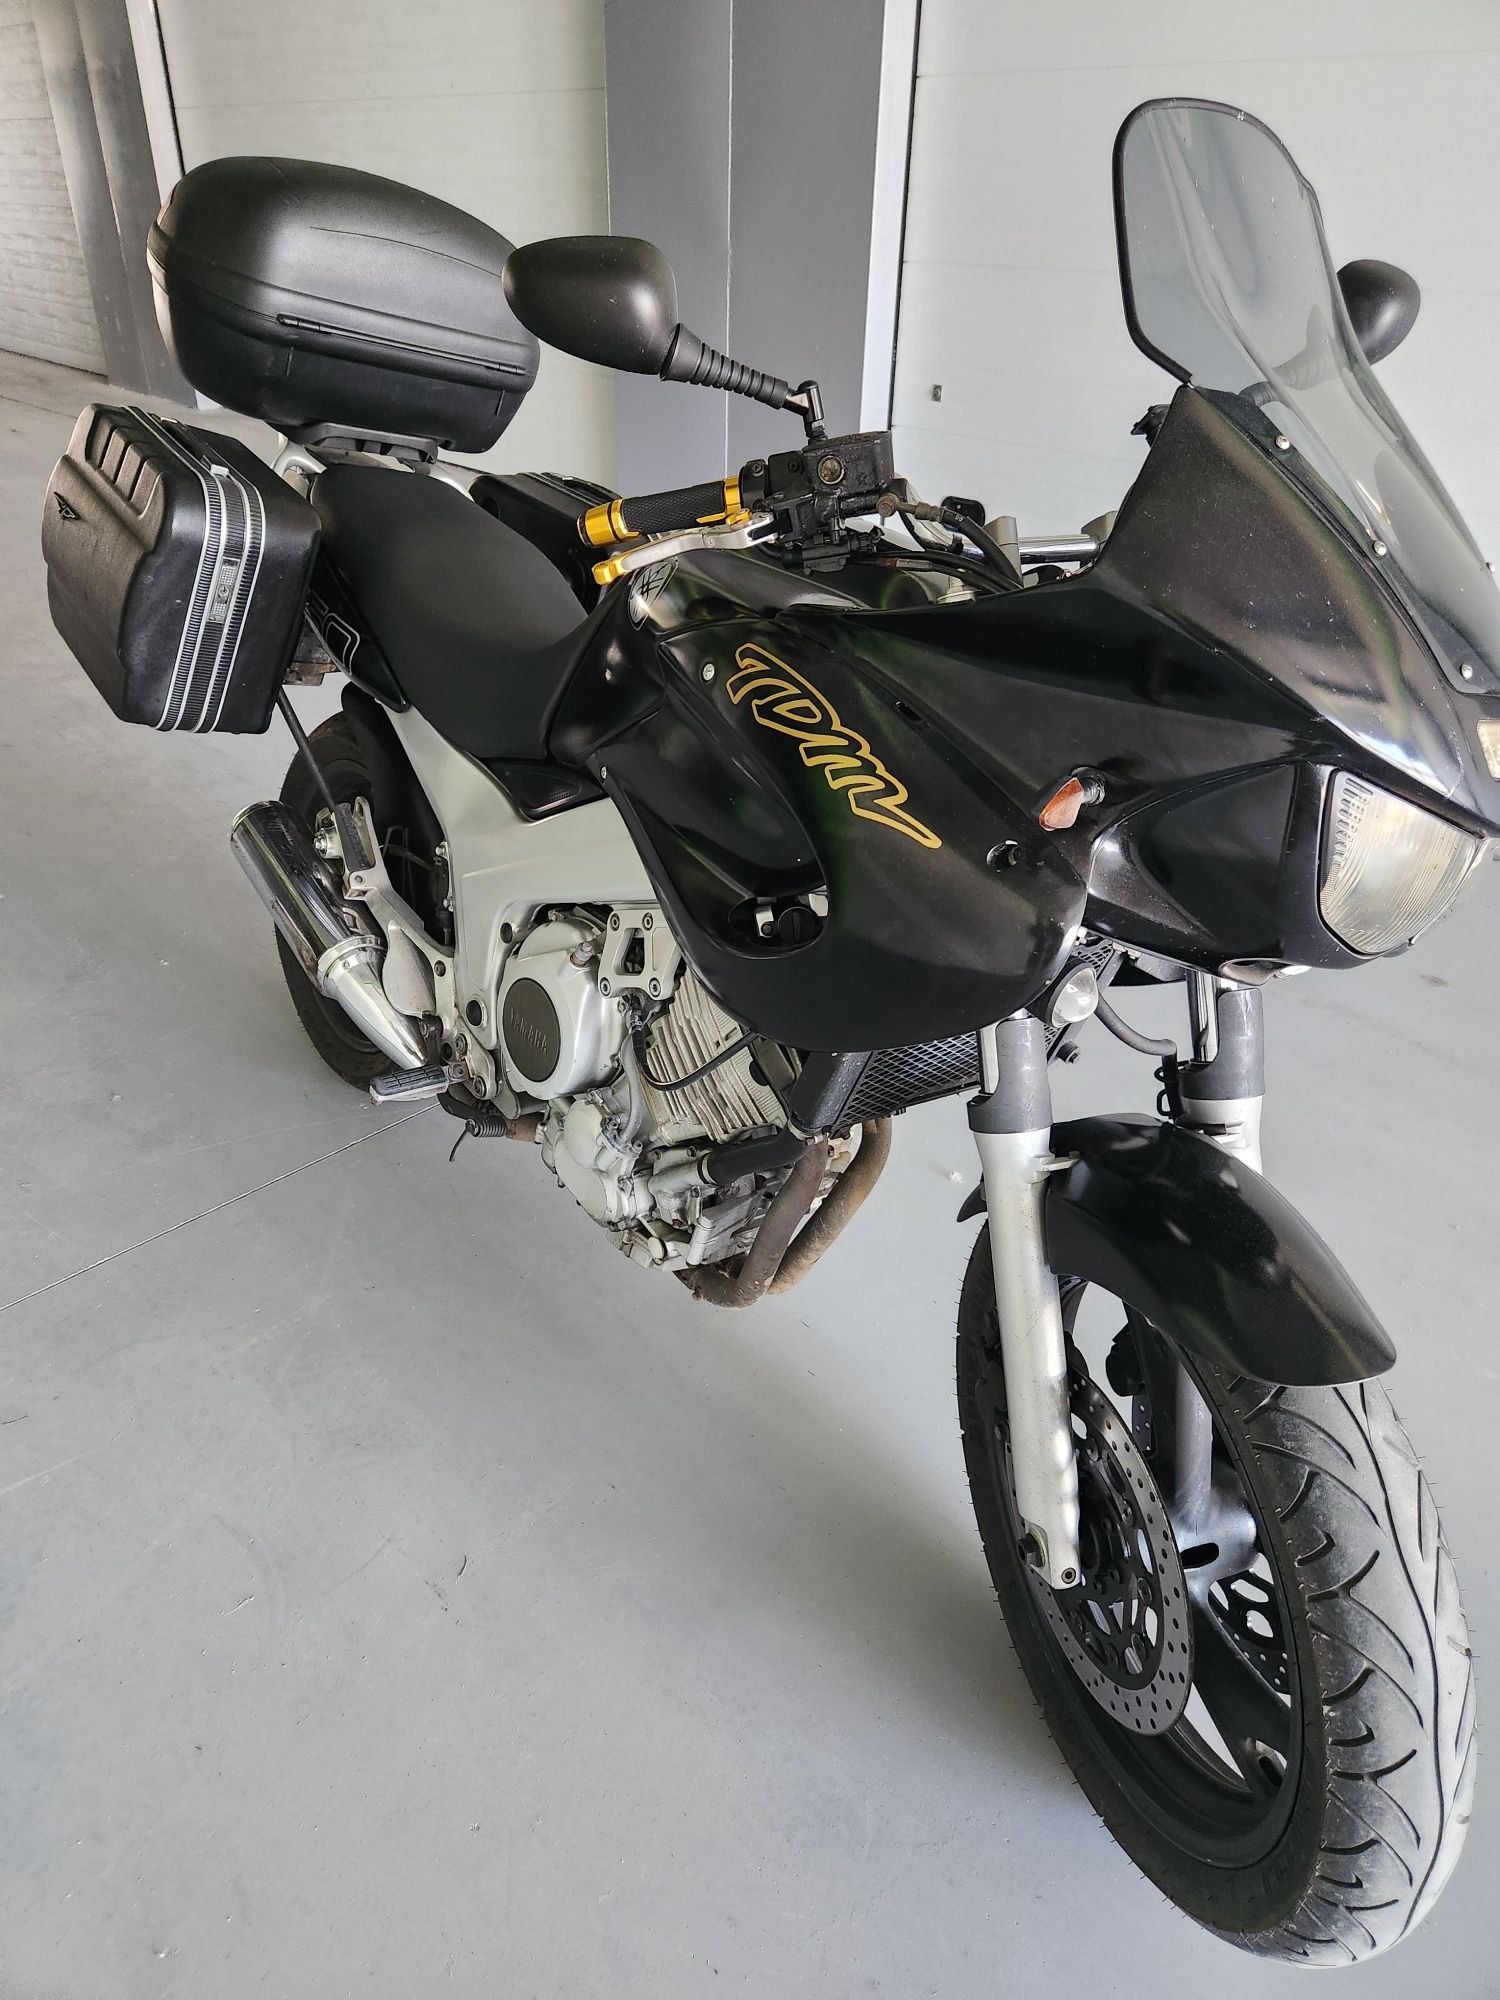 Yamaha tdm 850cc